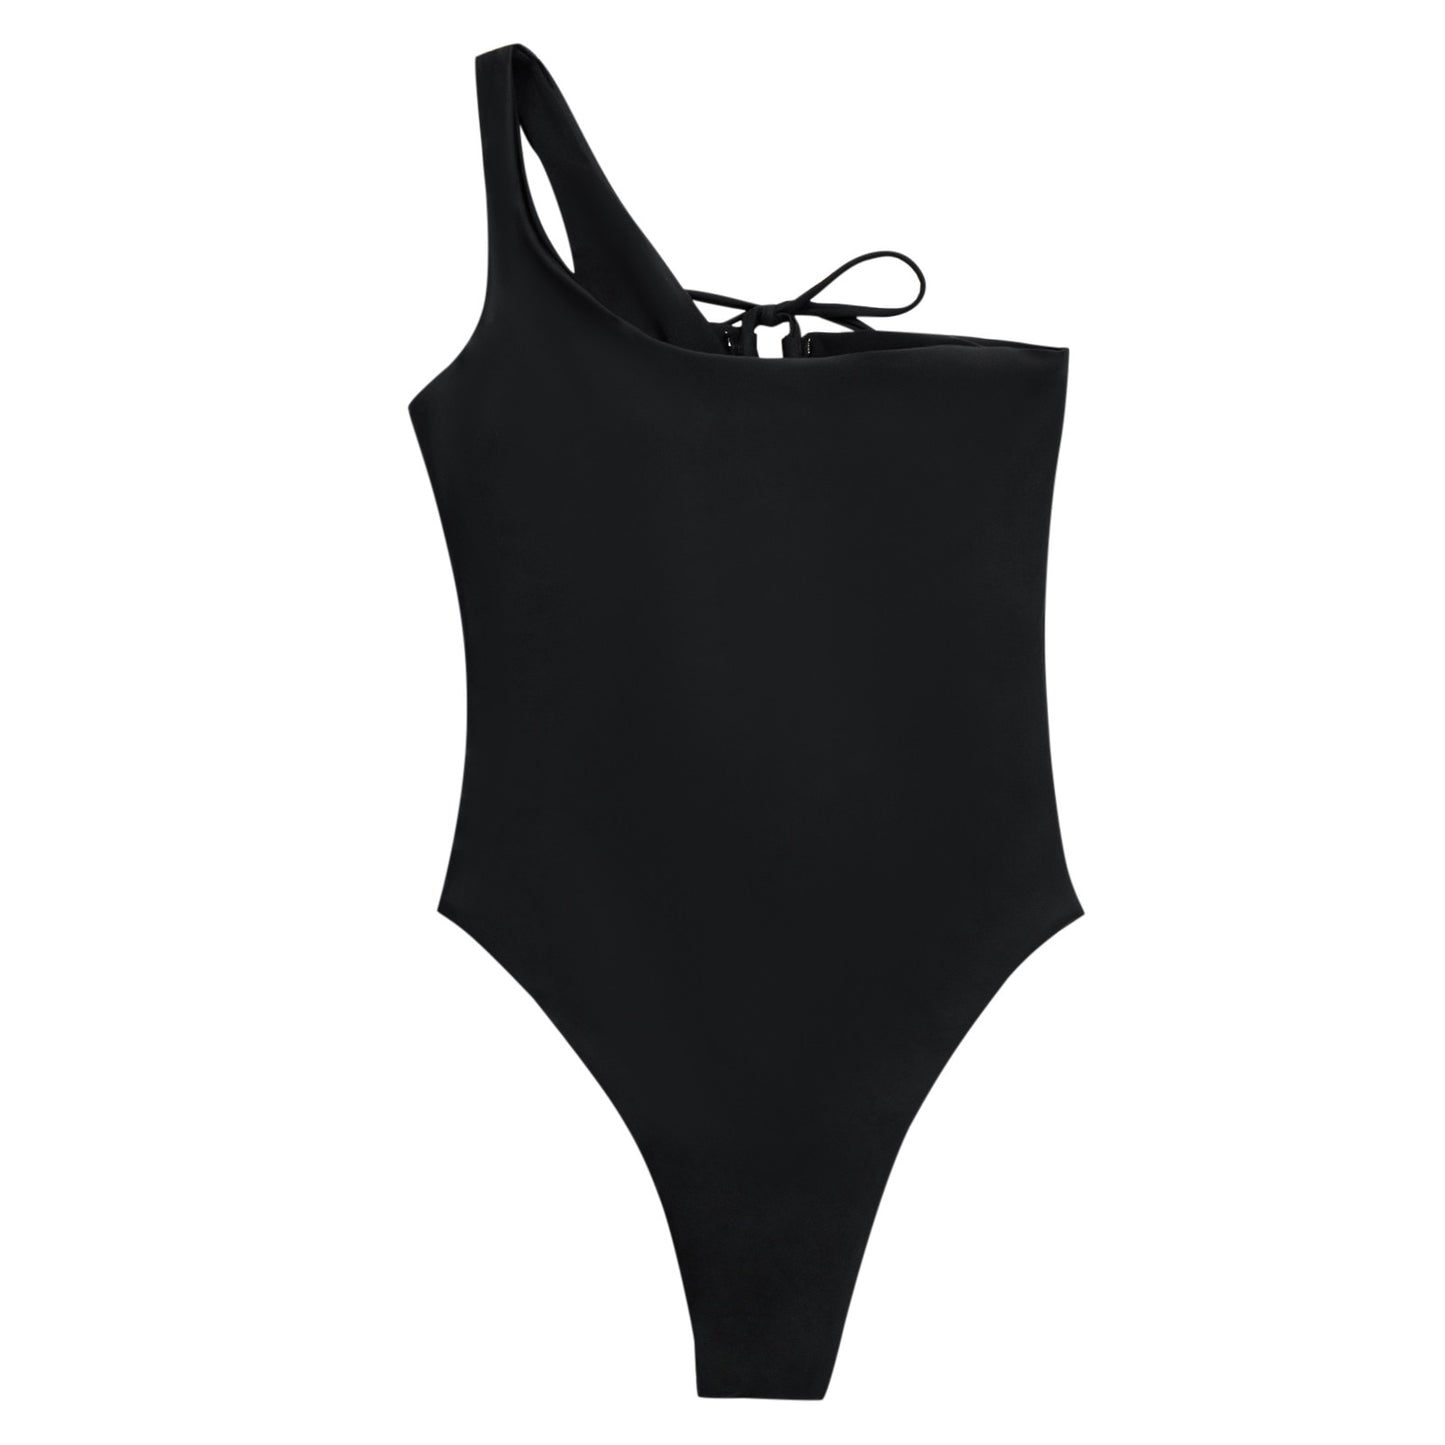 Hollow One-piece Swimsuit Cross Bandage Bikini